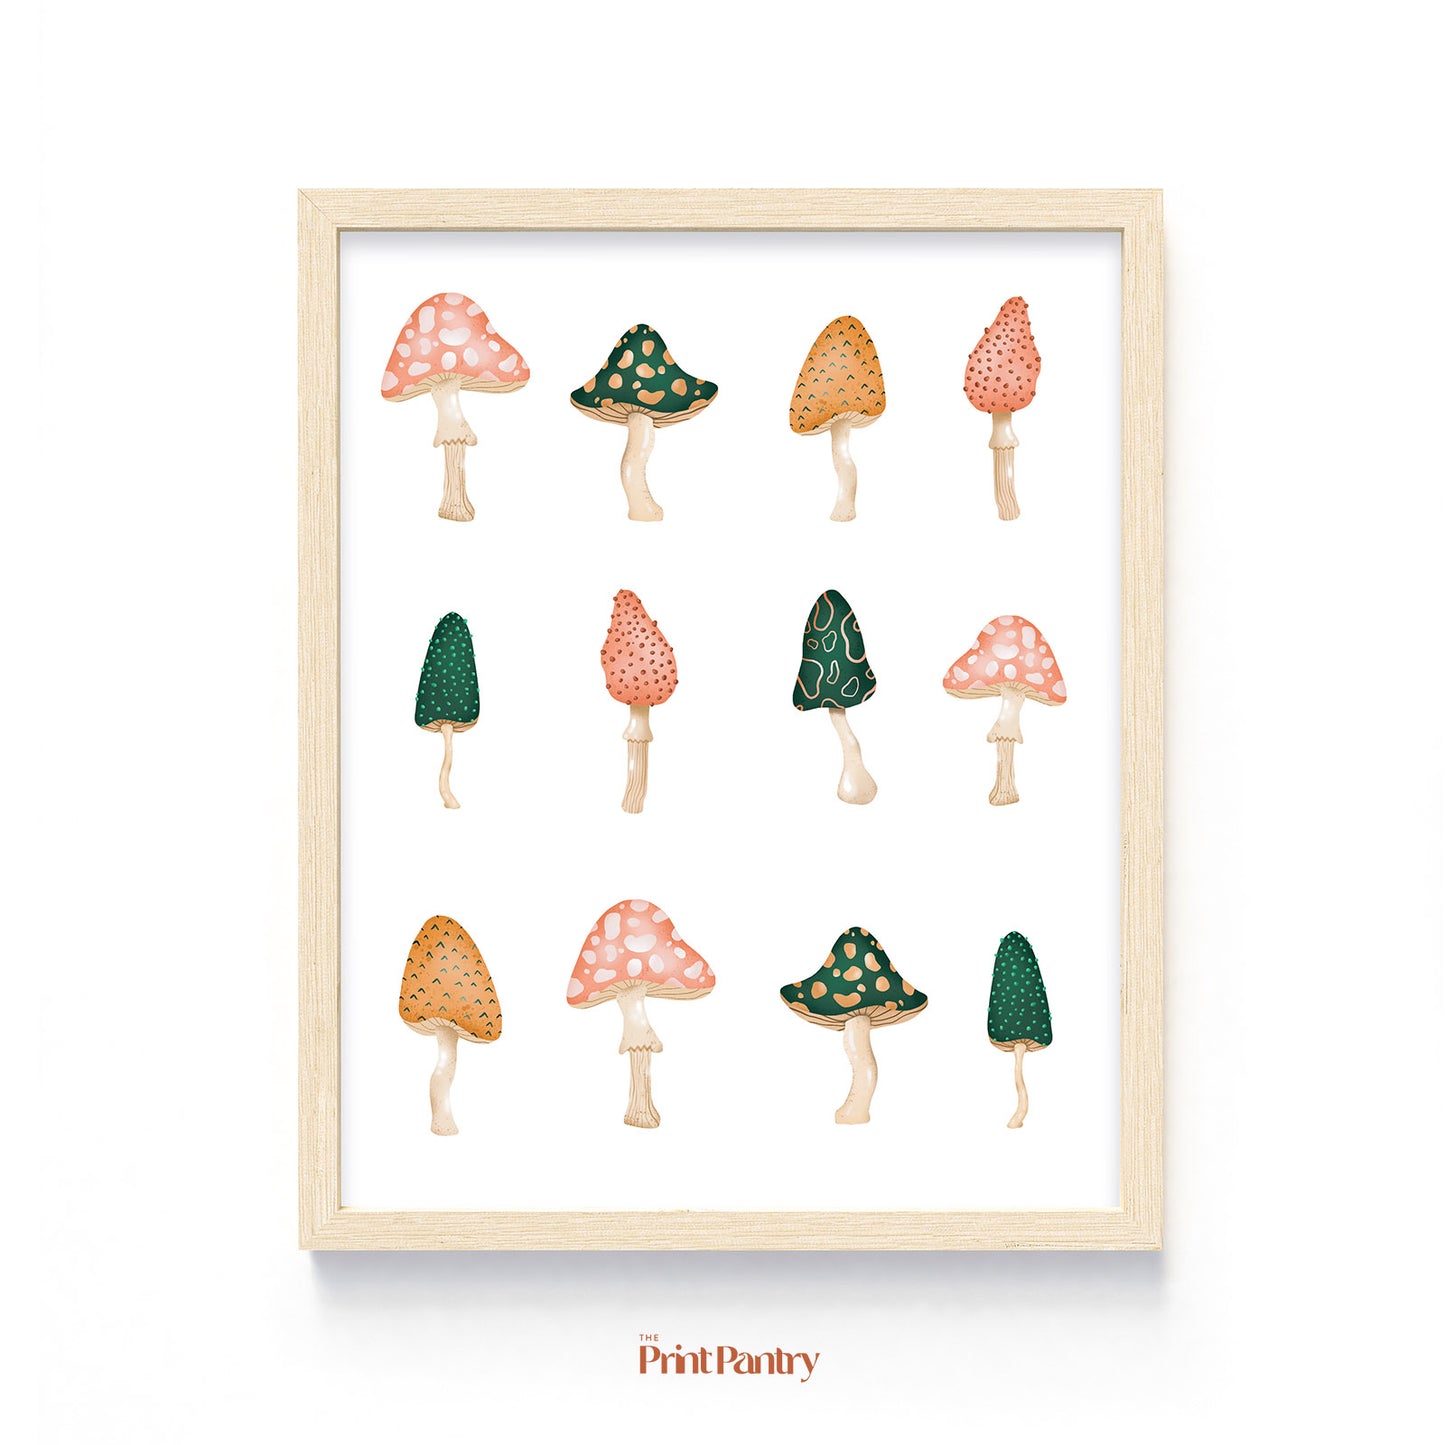 Mini Mushrooms Art Print shown in a wooden frame